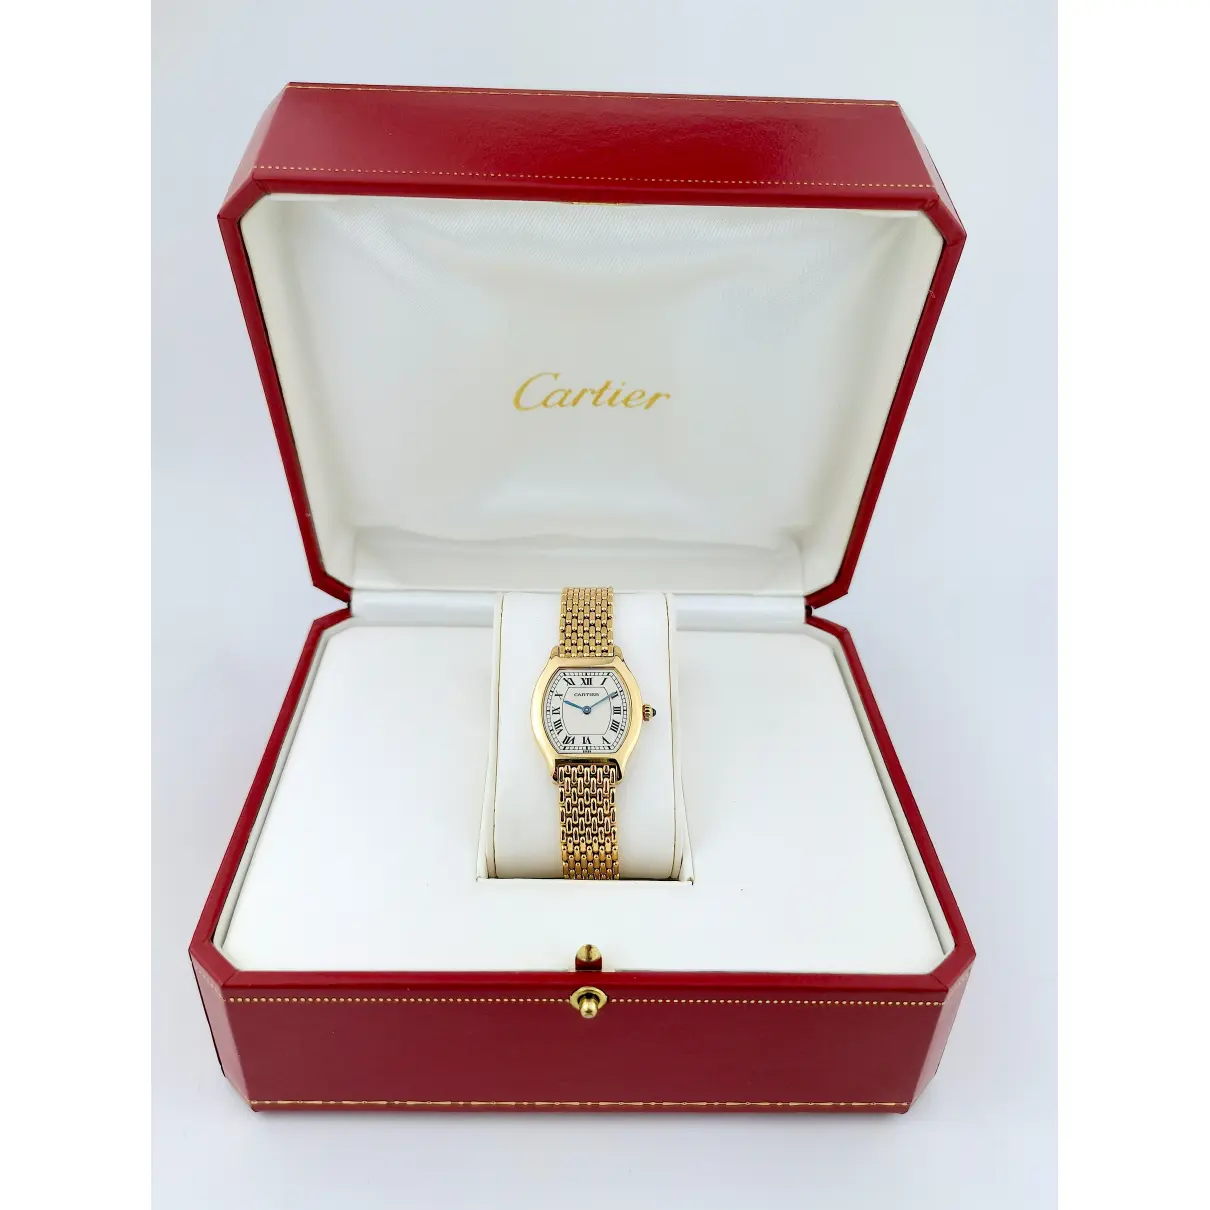 Buy Cartier Tortue yellow gold watch online